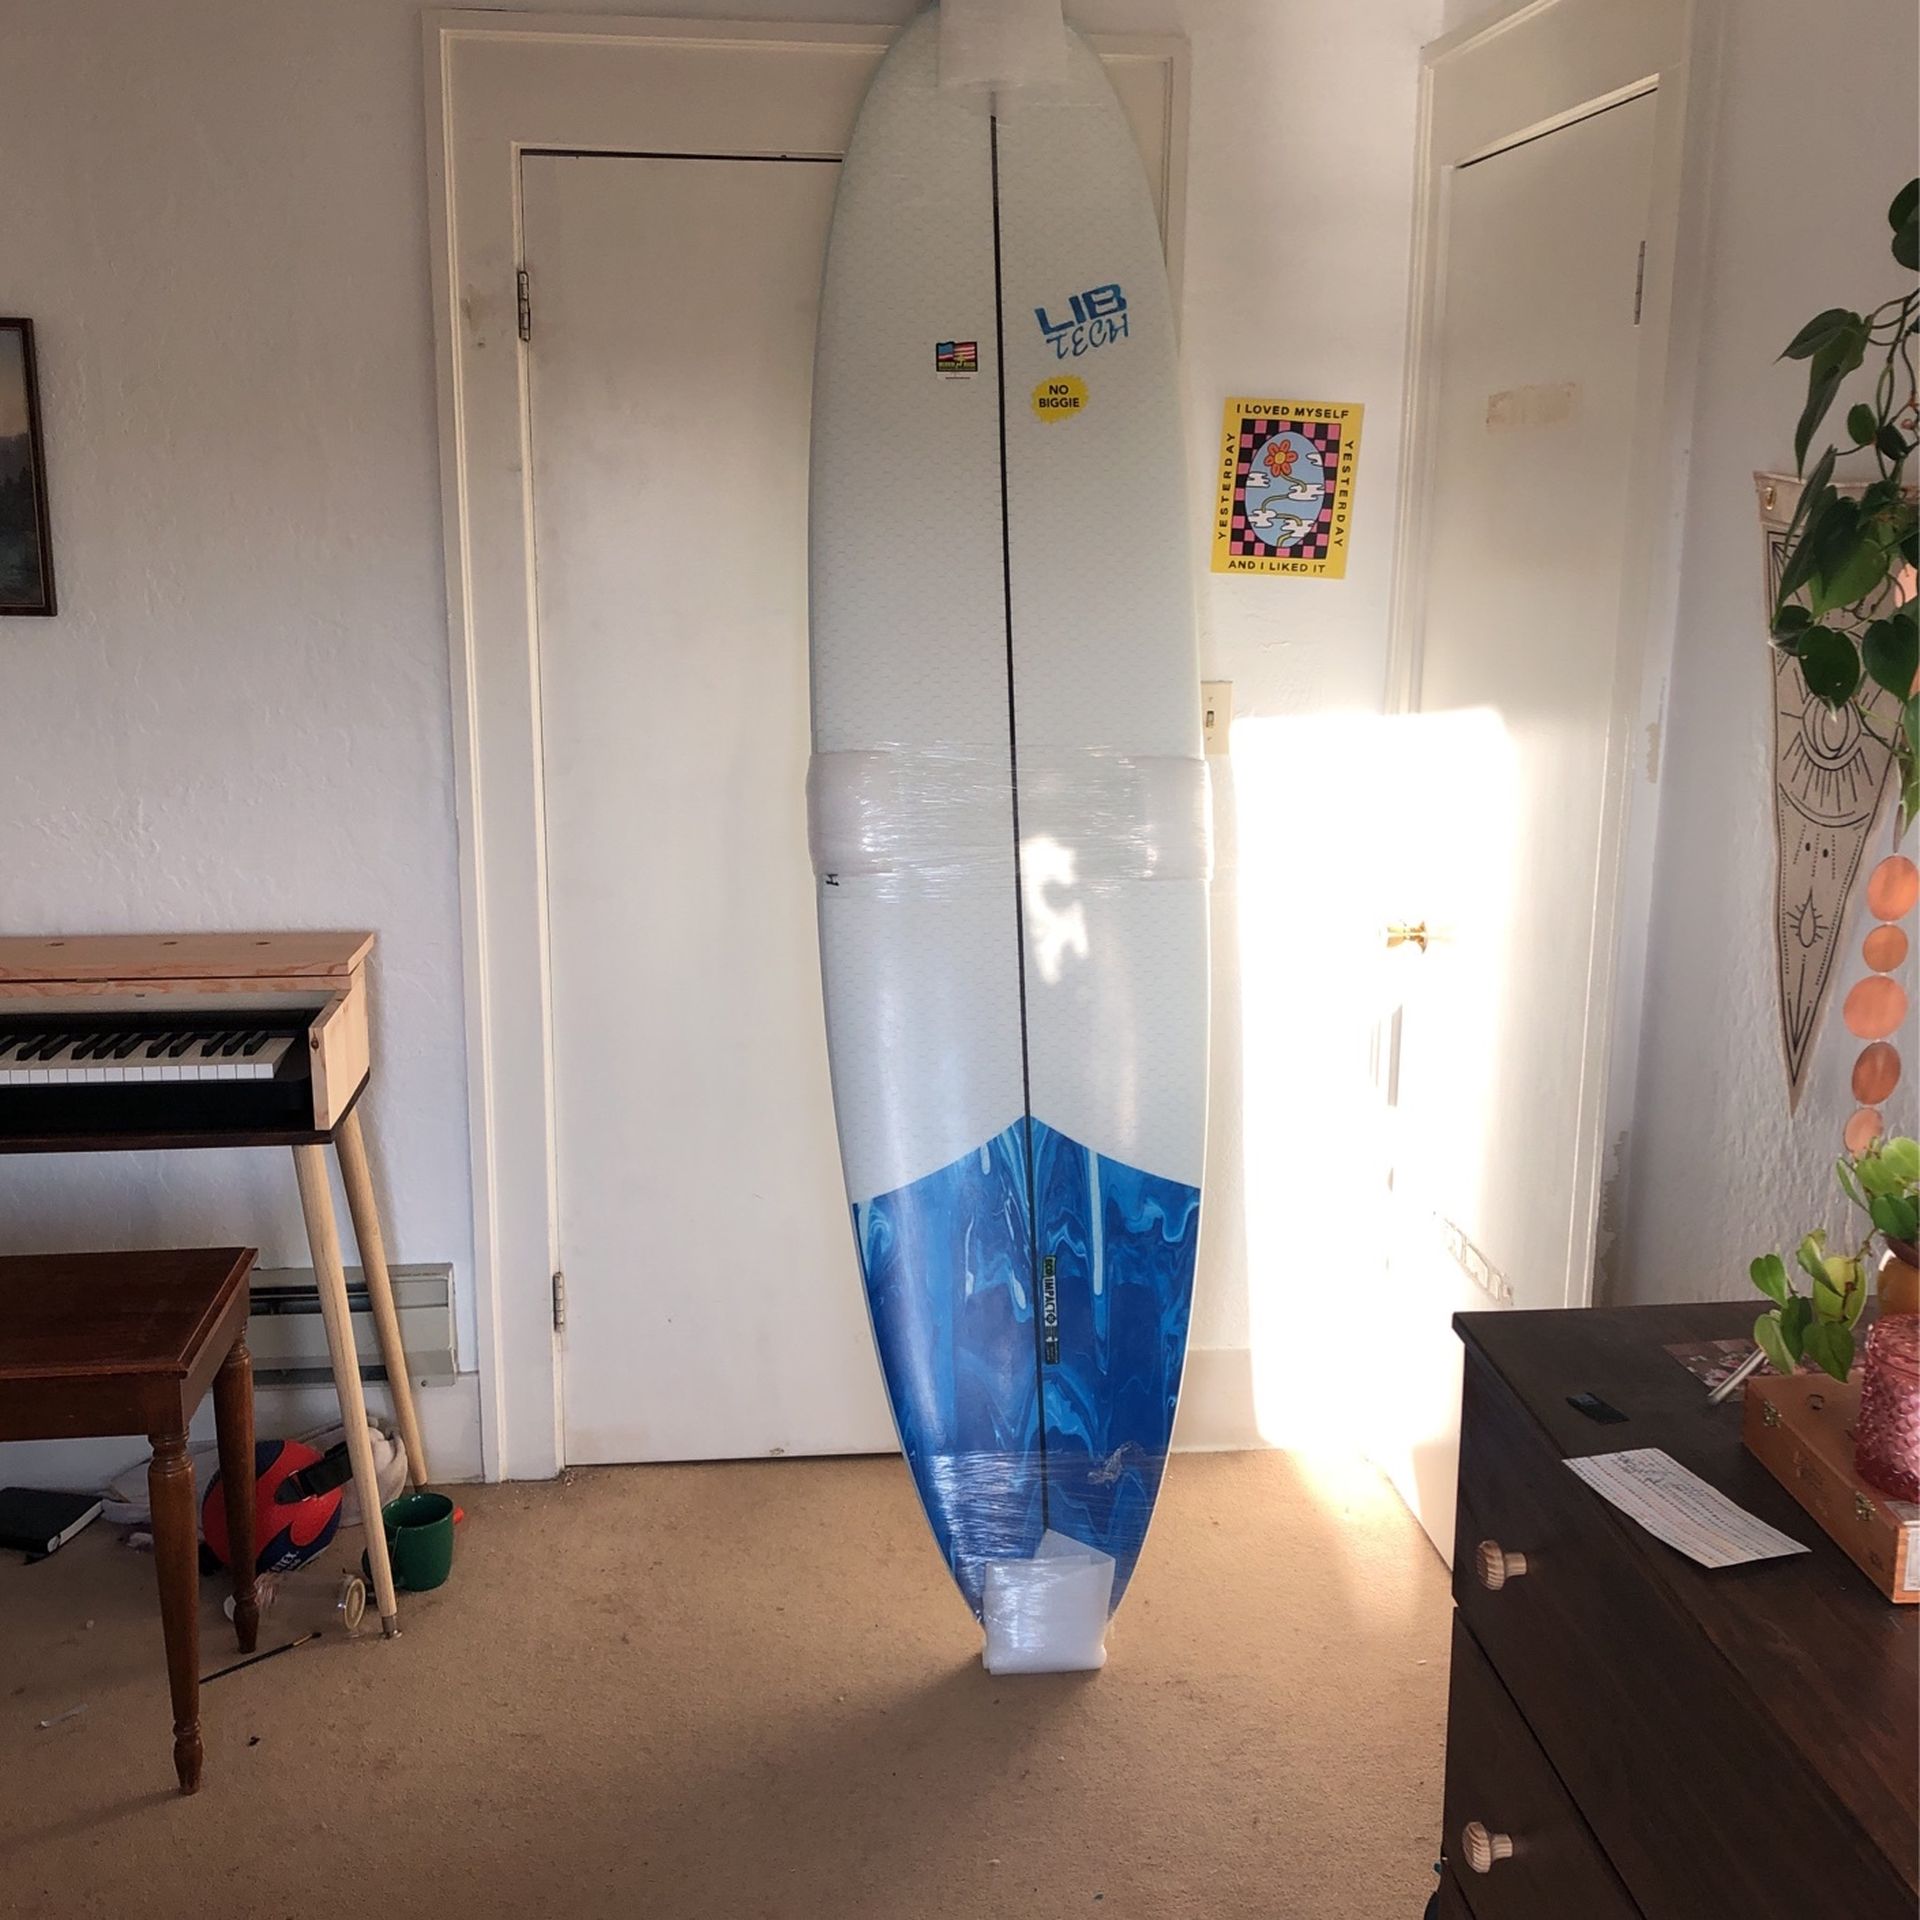 Brand New Pick Up Stick Lib tech Surfboard